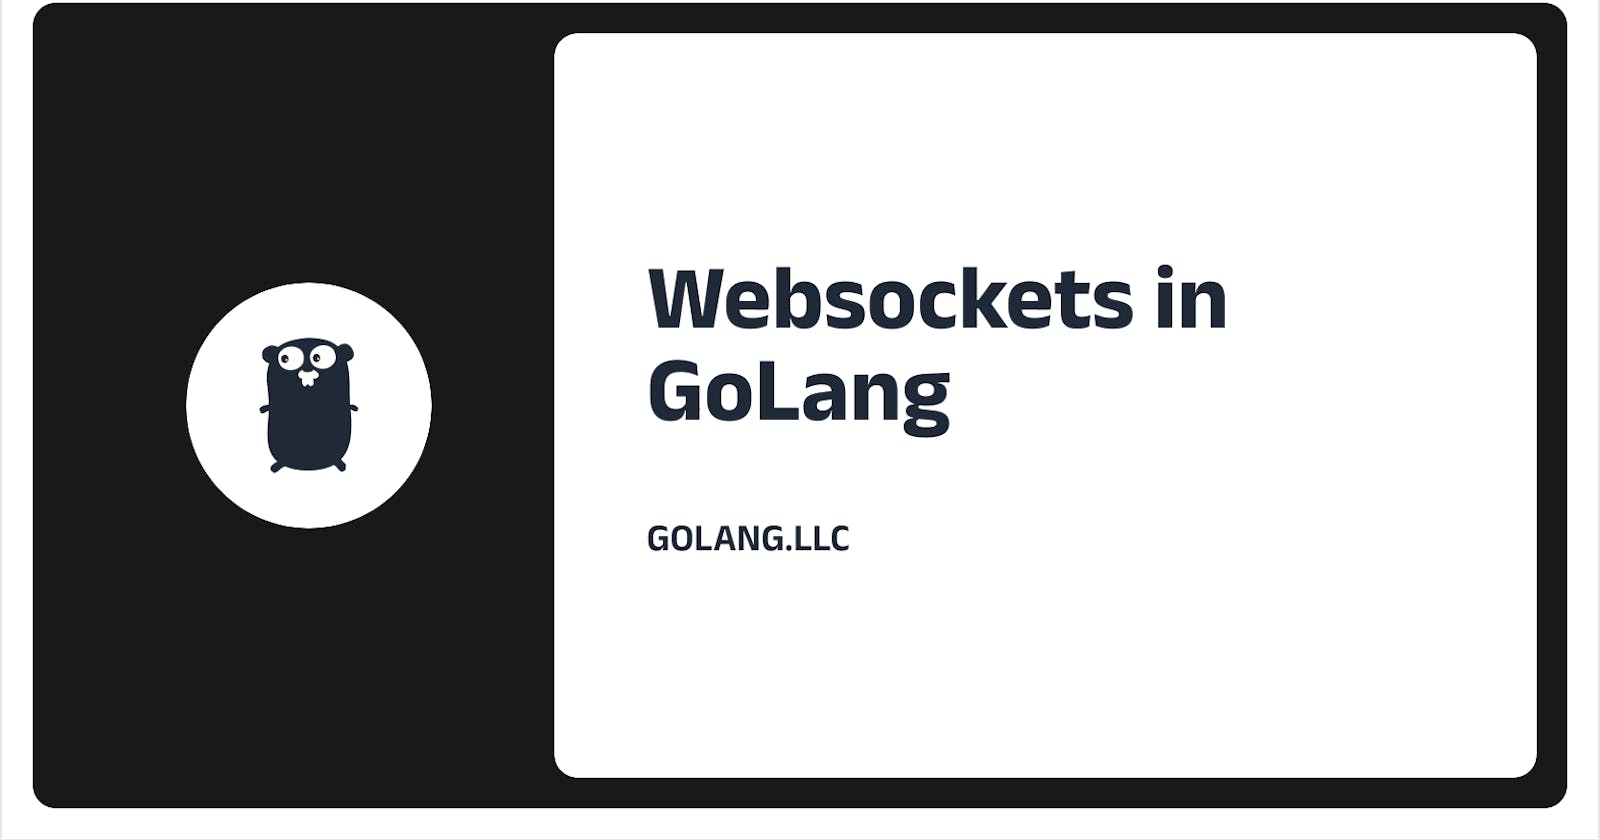 Websockets in Golang